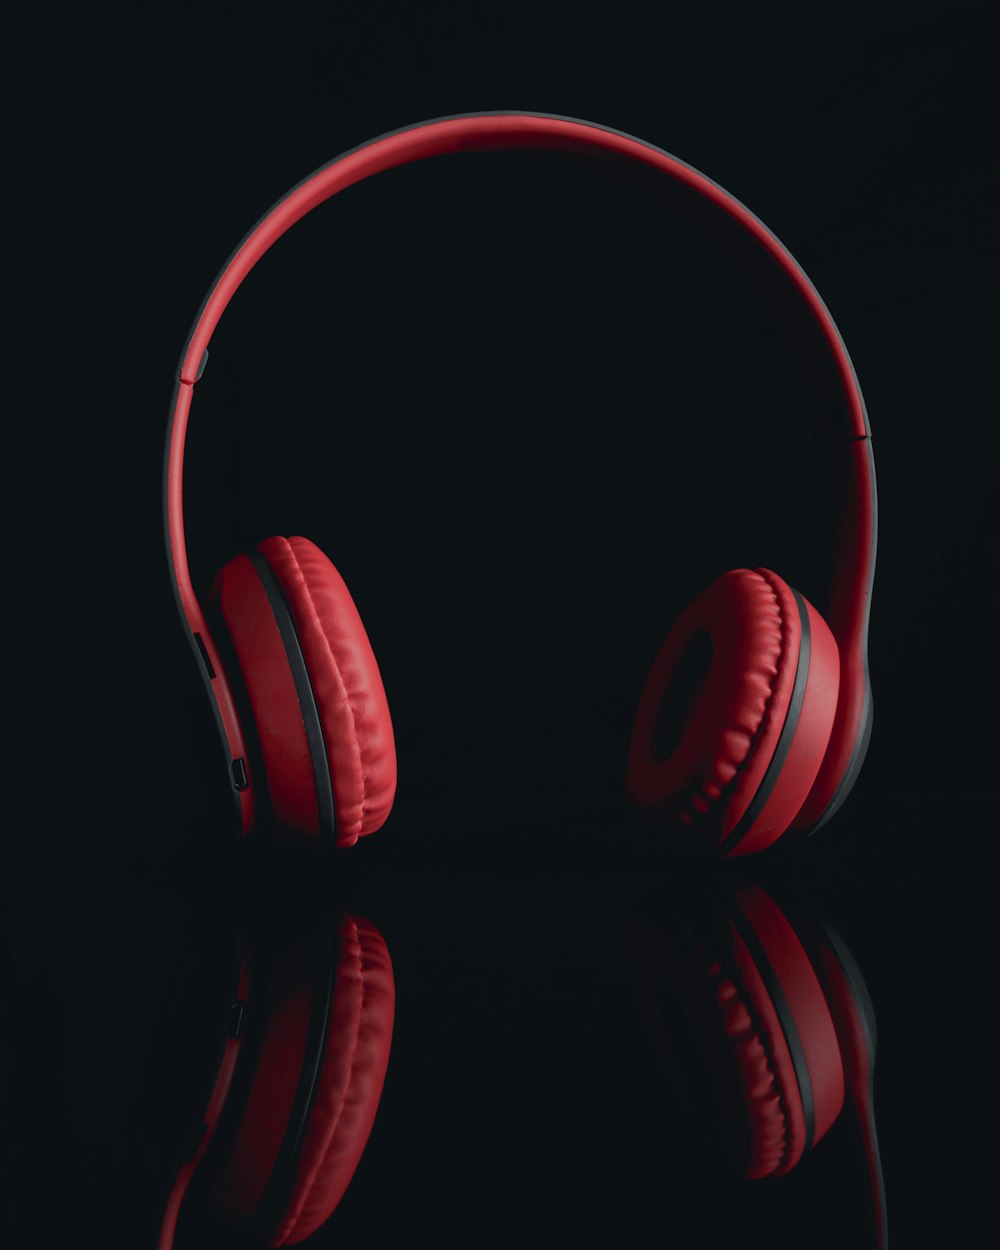 a pair of red headphones